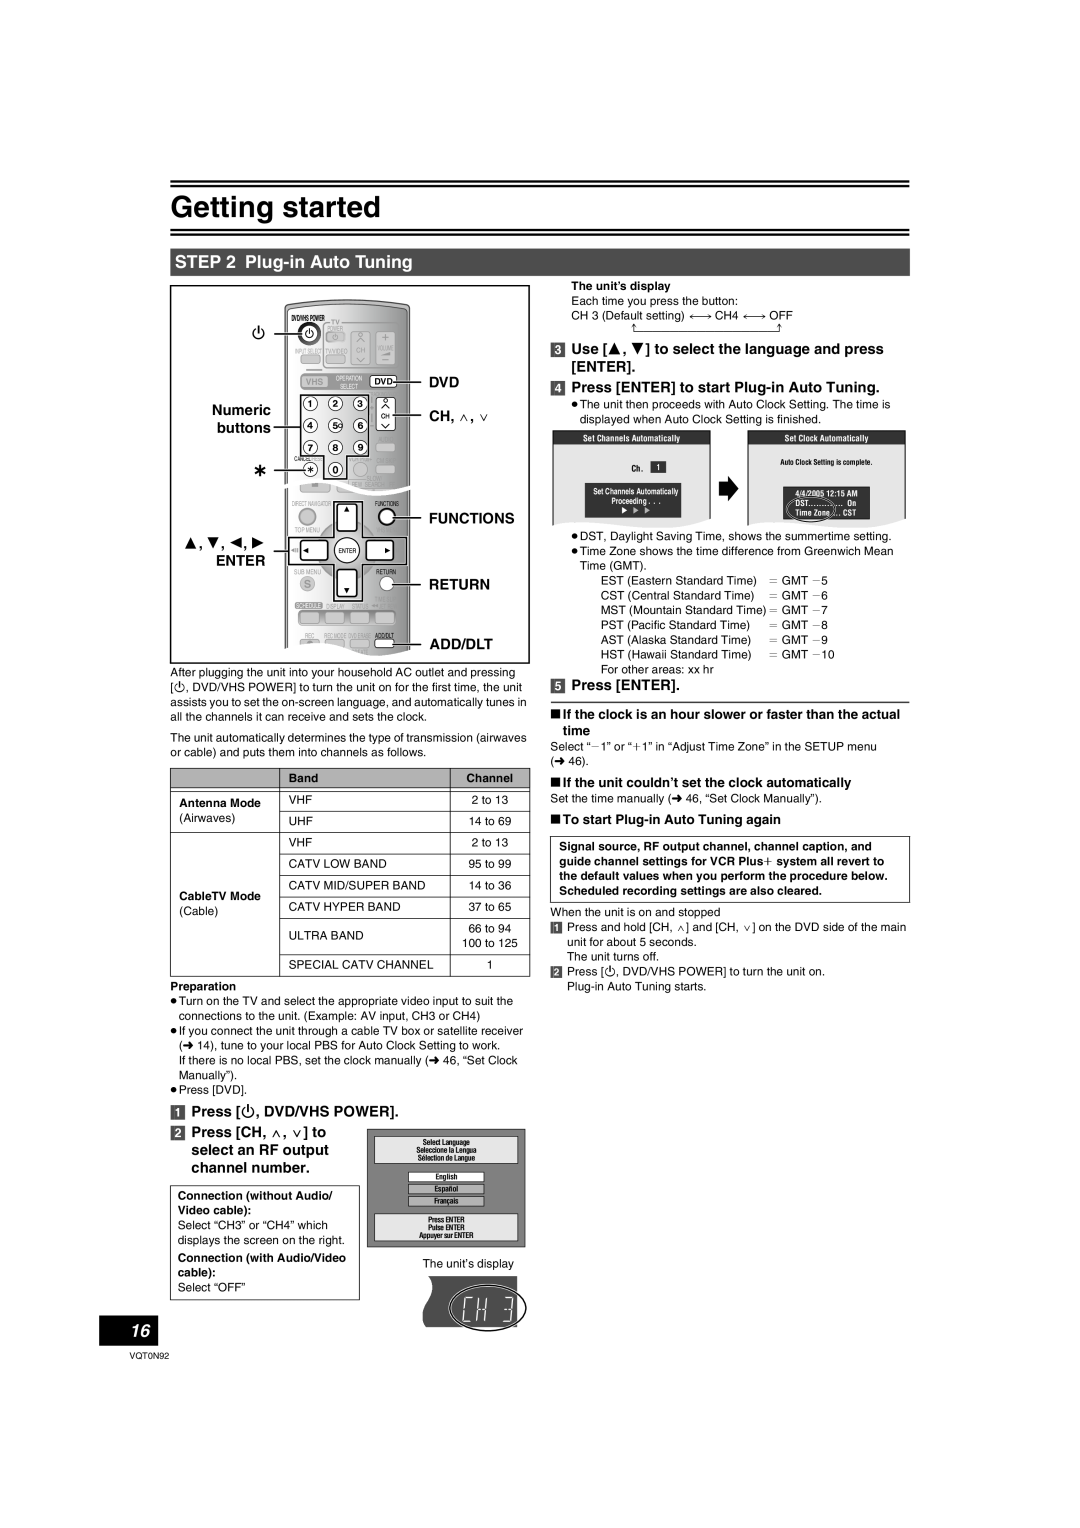 Panasonic DMR-ES30V Plug-in Auto Tuning, Numeric, buttons, Functions, 3, 4, 2, Enter, S Return, Add/Dlt, Press ENTER 